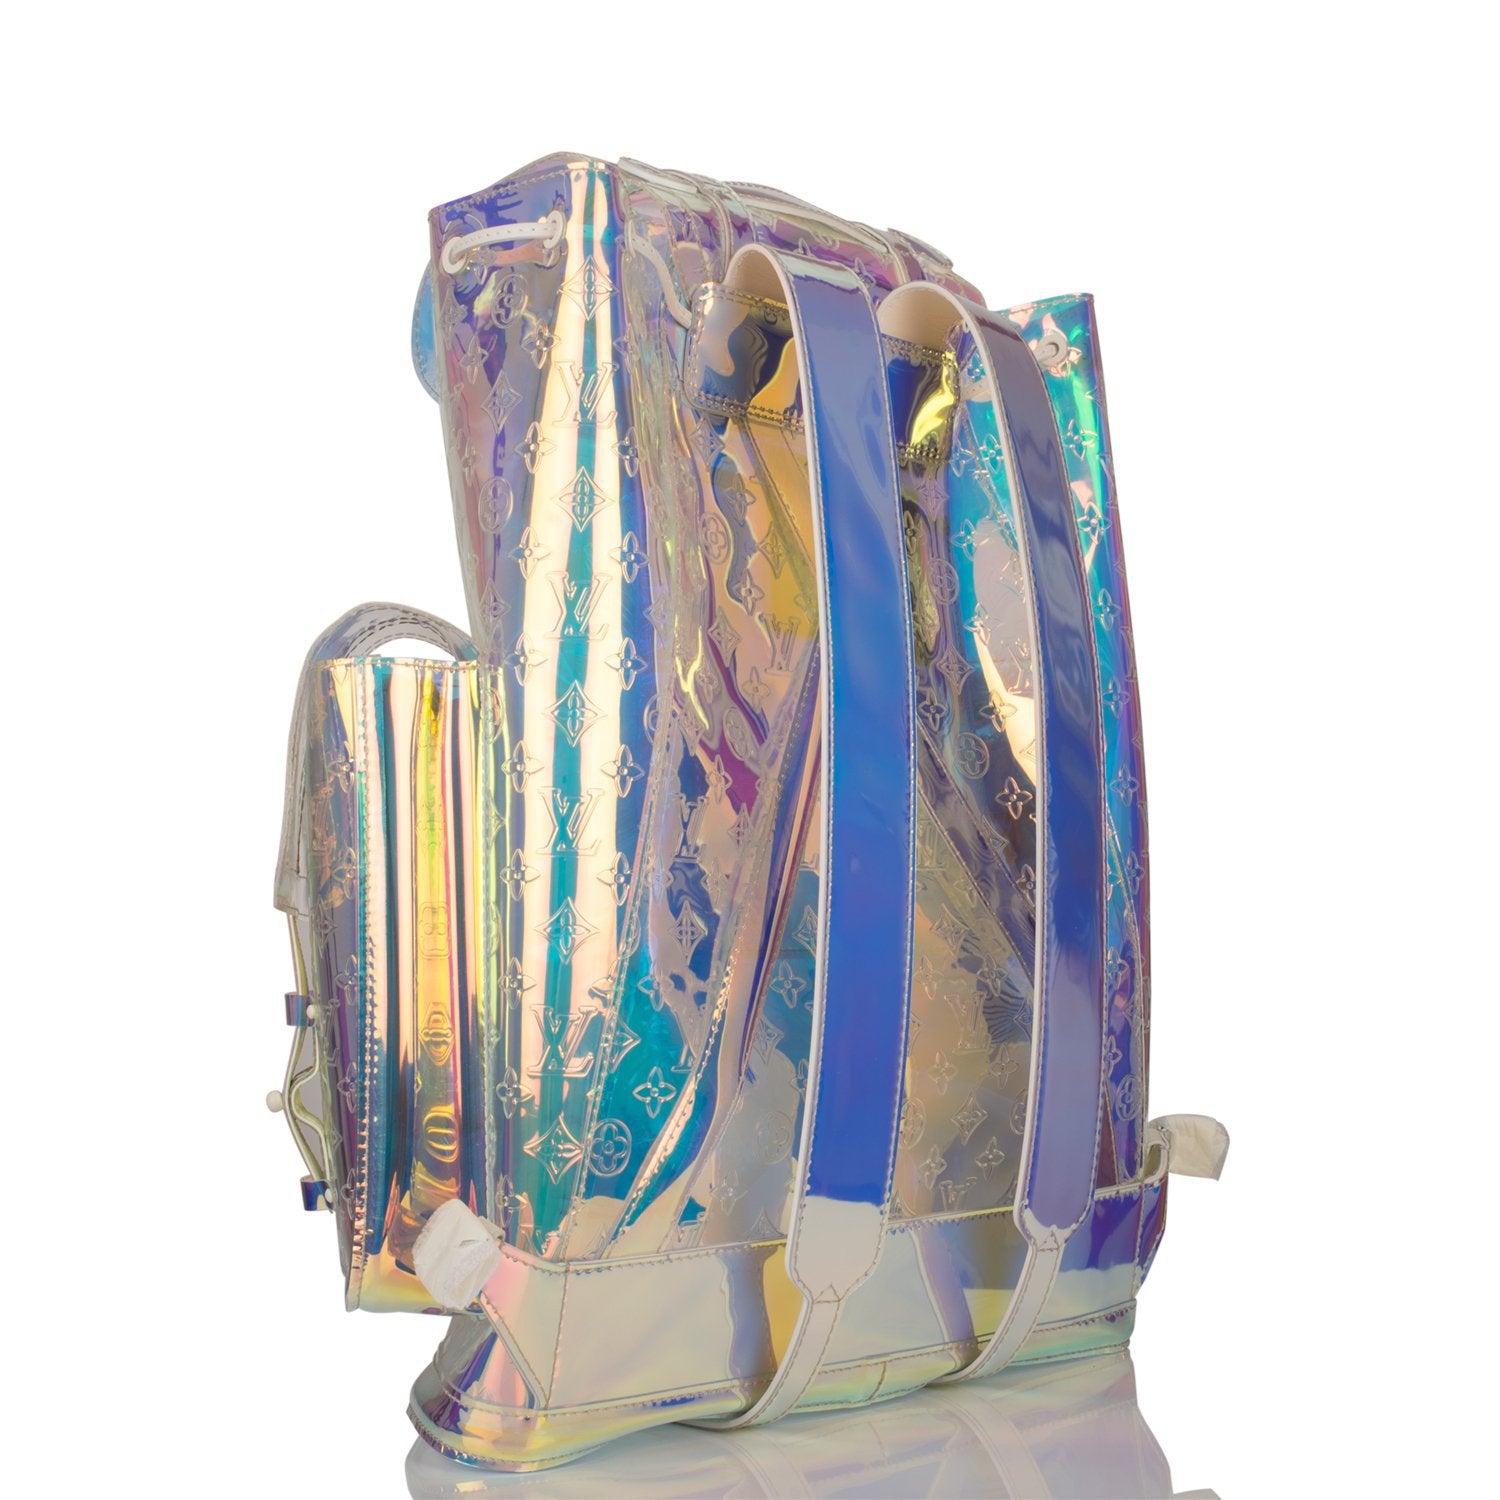 Louis Vuitton Pre-owned x Virgil Abloh Prism Christopher Backpack - Multicolour